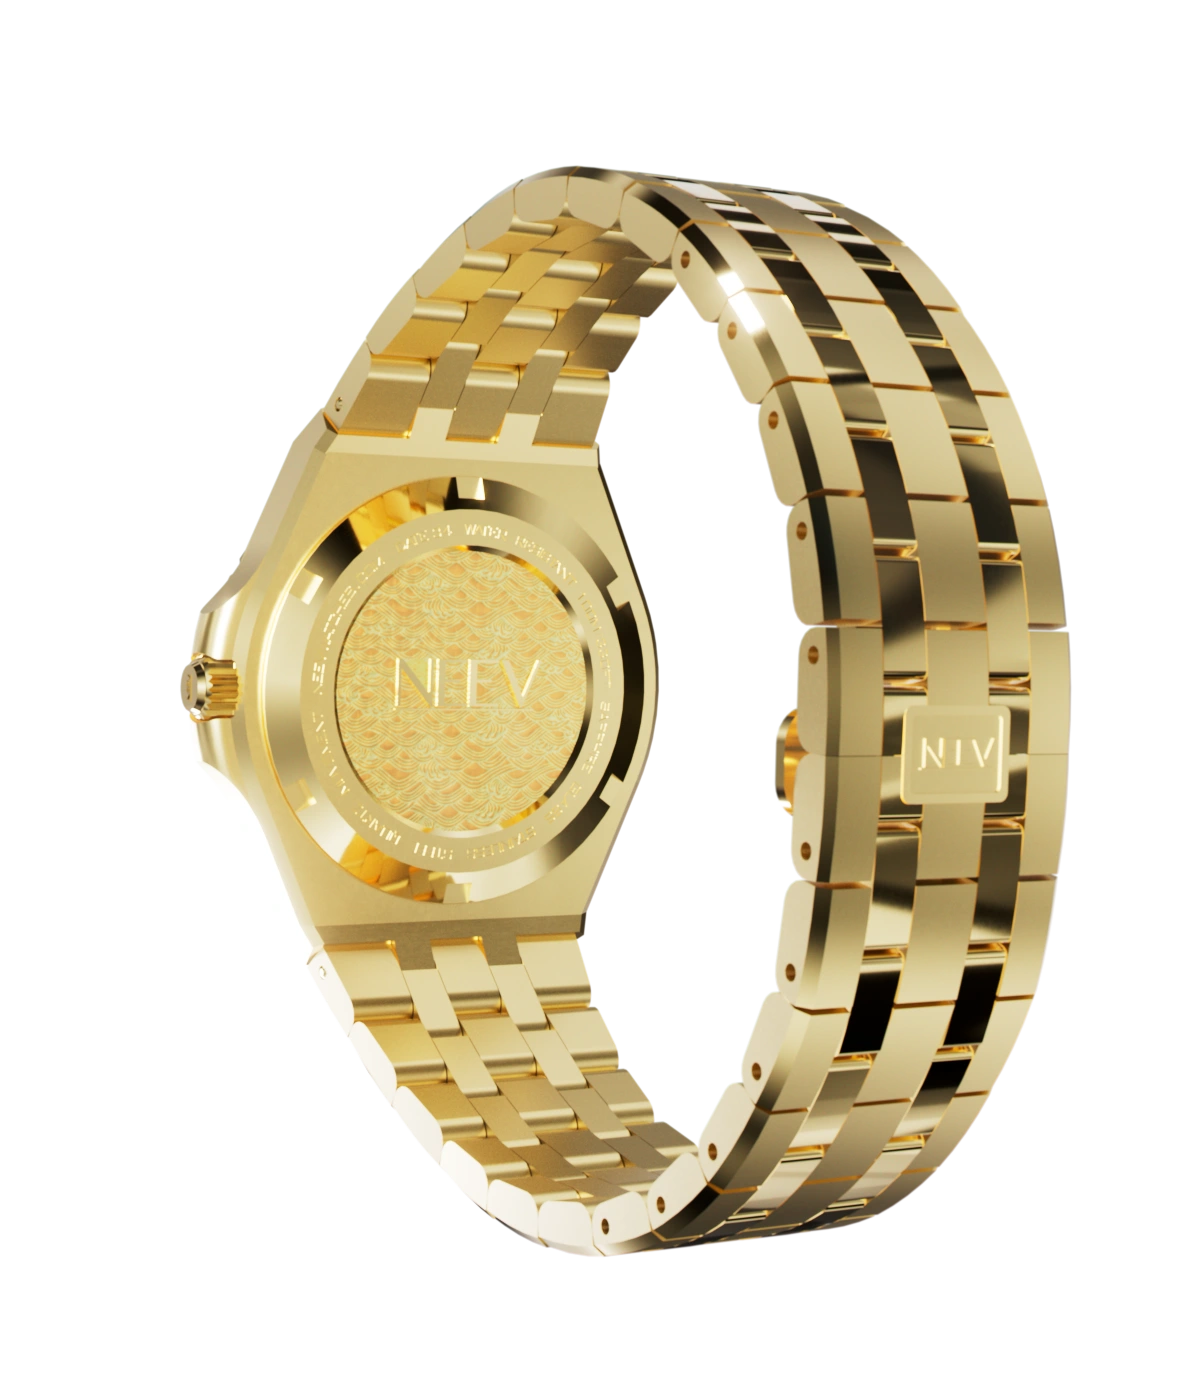 NEEV gold watch